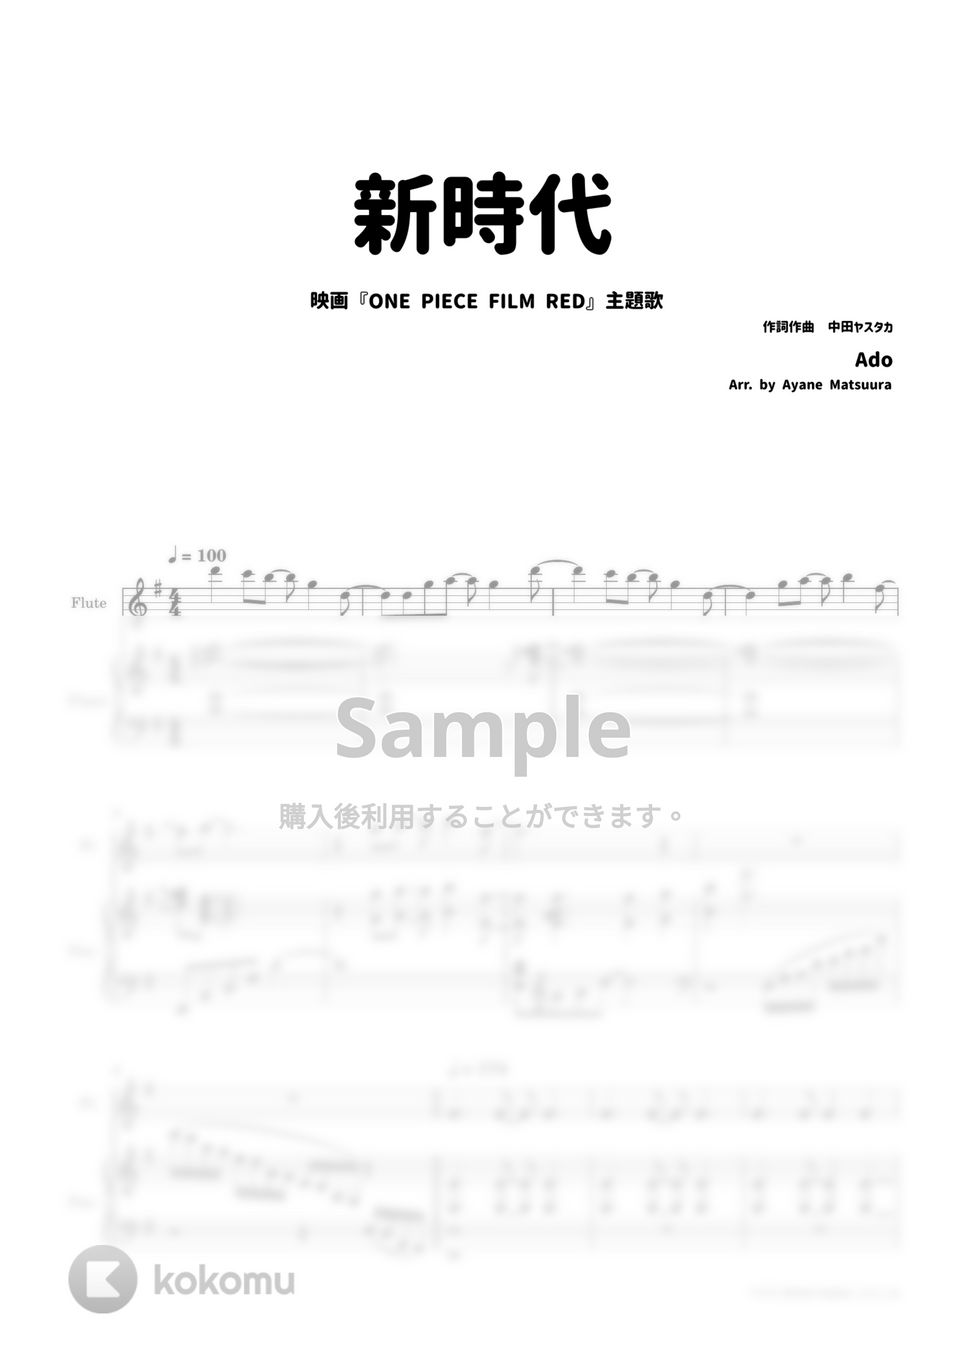 Ado - 新時代 [フルート＆ピアノ] Ado (ONE PIECE FILM RED) by 管楽器の楽譜★ふるすこあ